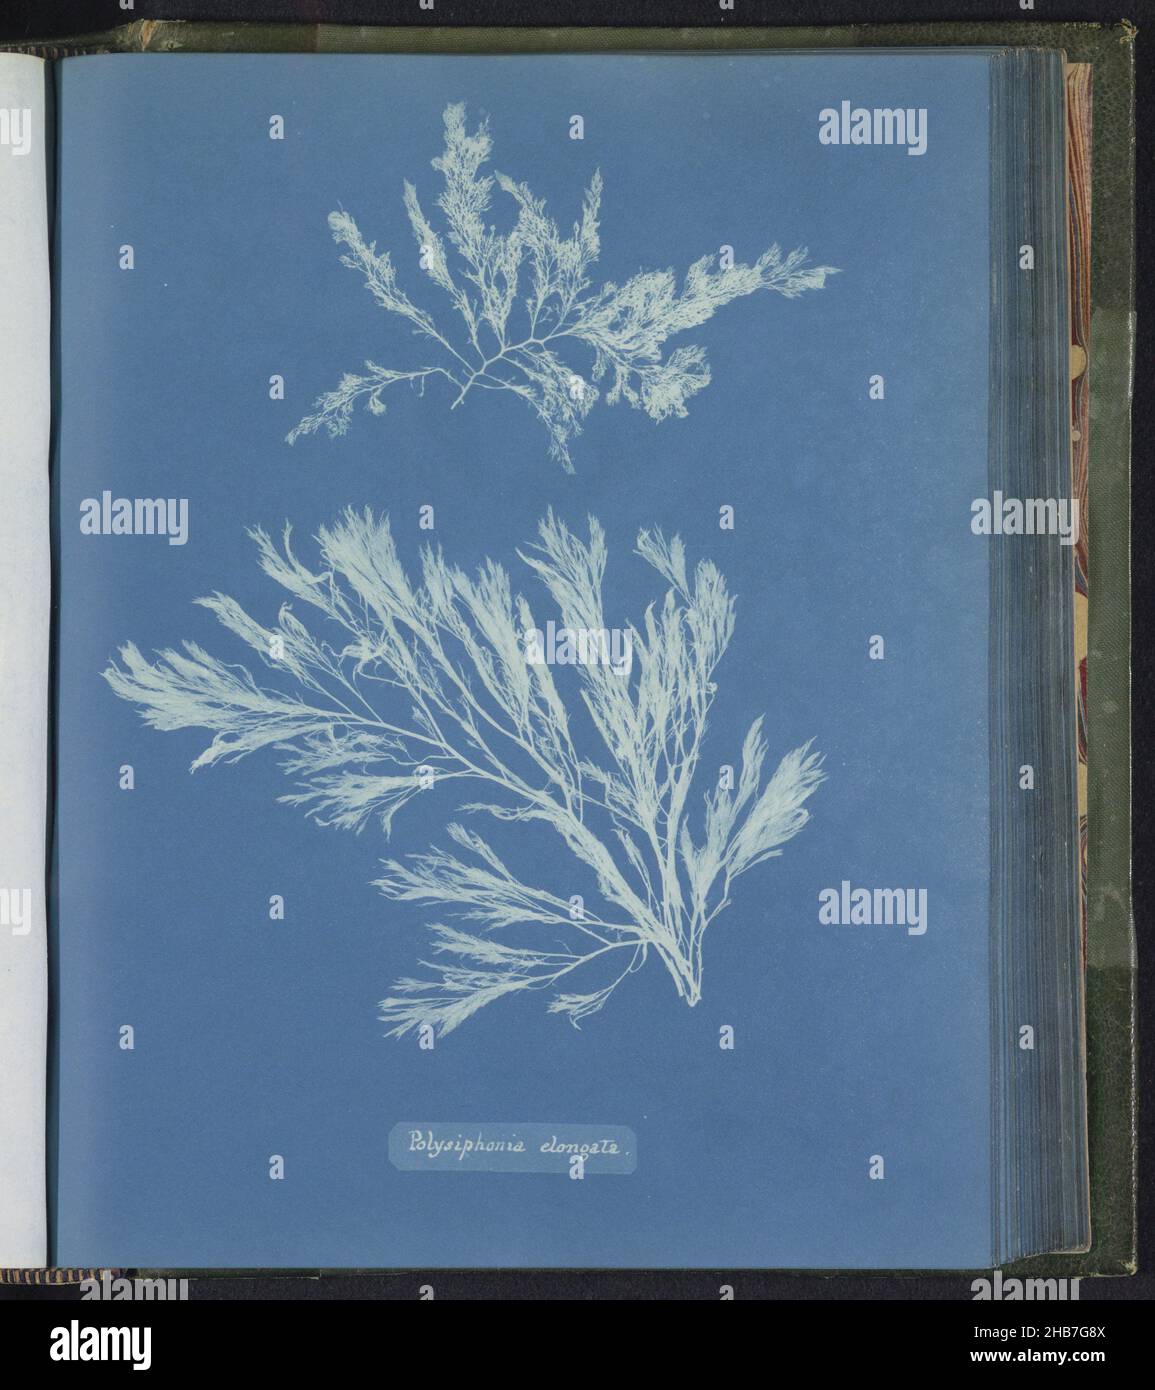 Polysiphonia elongata, Anna Atkins, United Kingdom, c. 1843 - c. 1853, photographic support, cyanotype, height 250 mm × width 200 mm Stock Photo